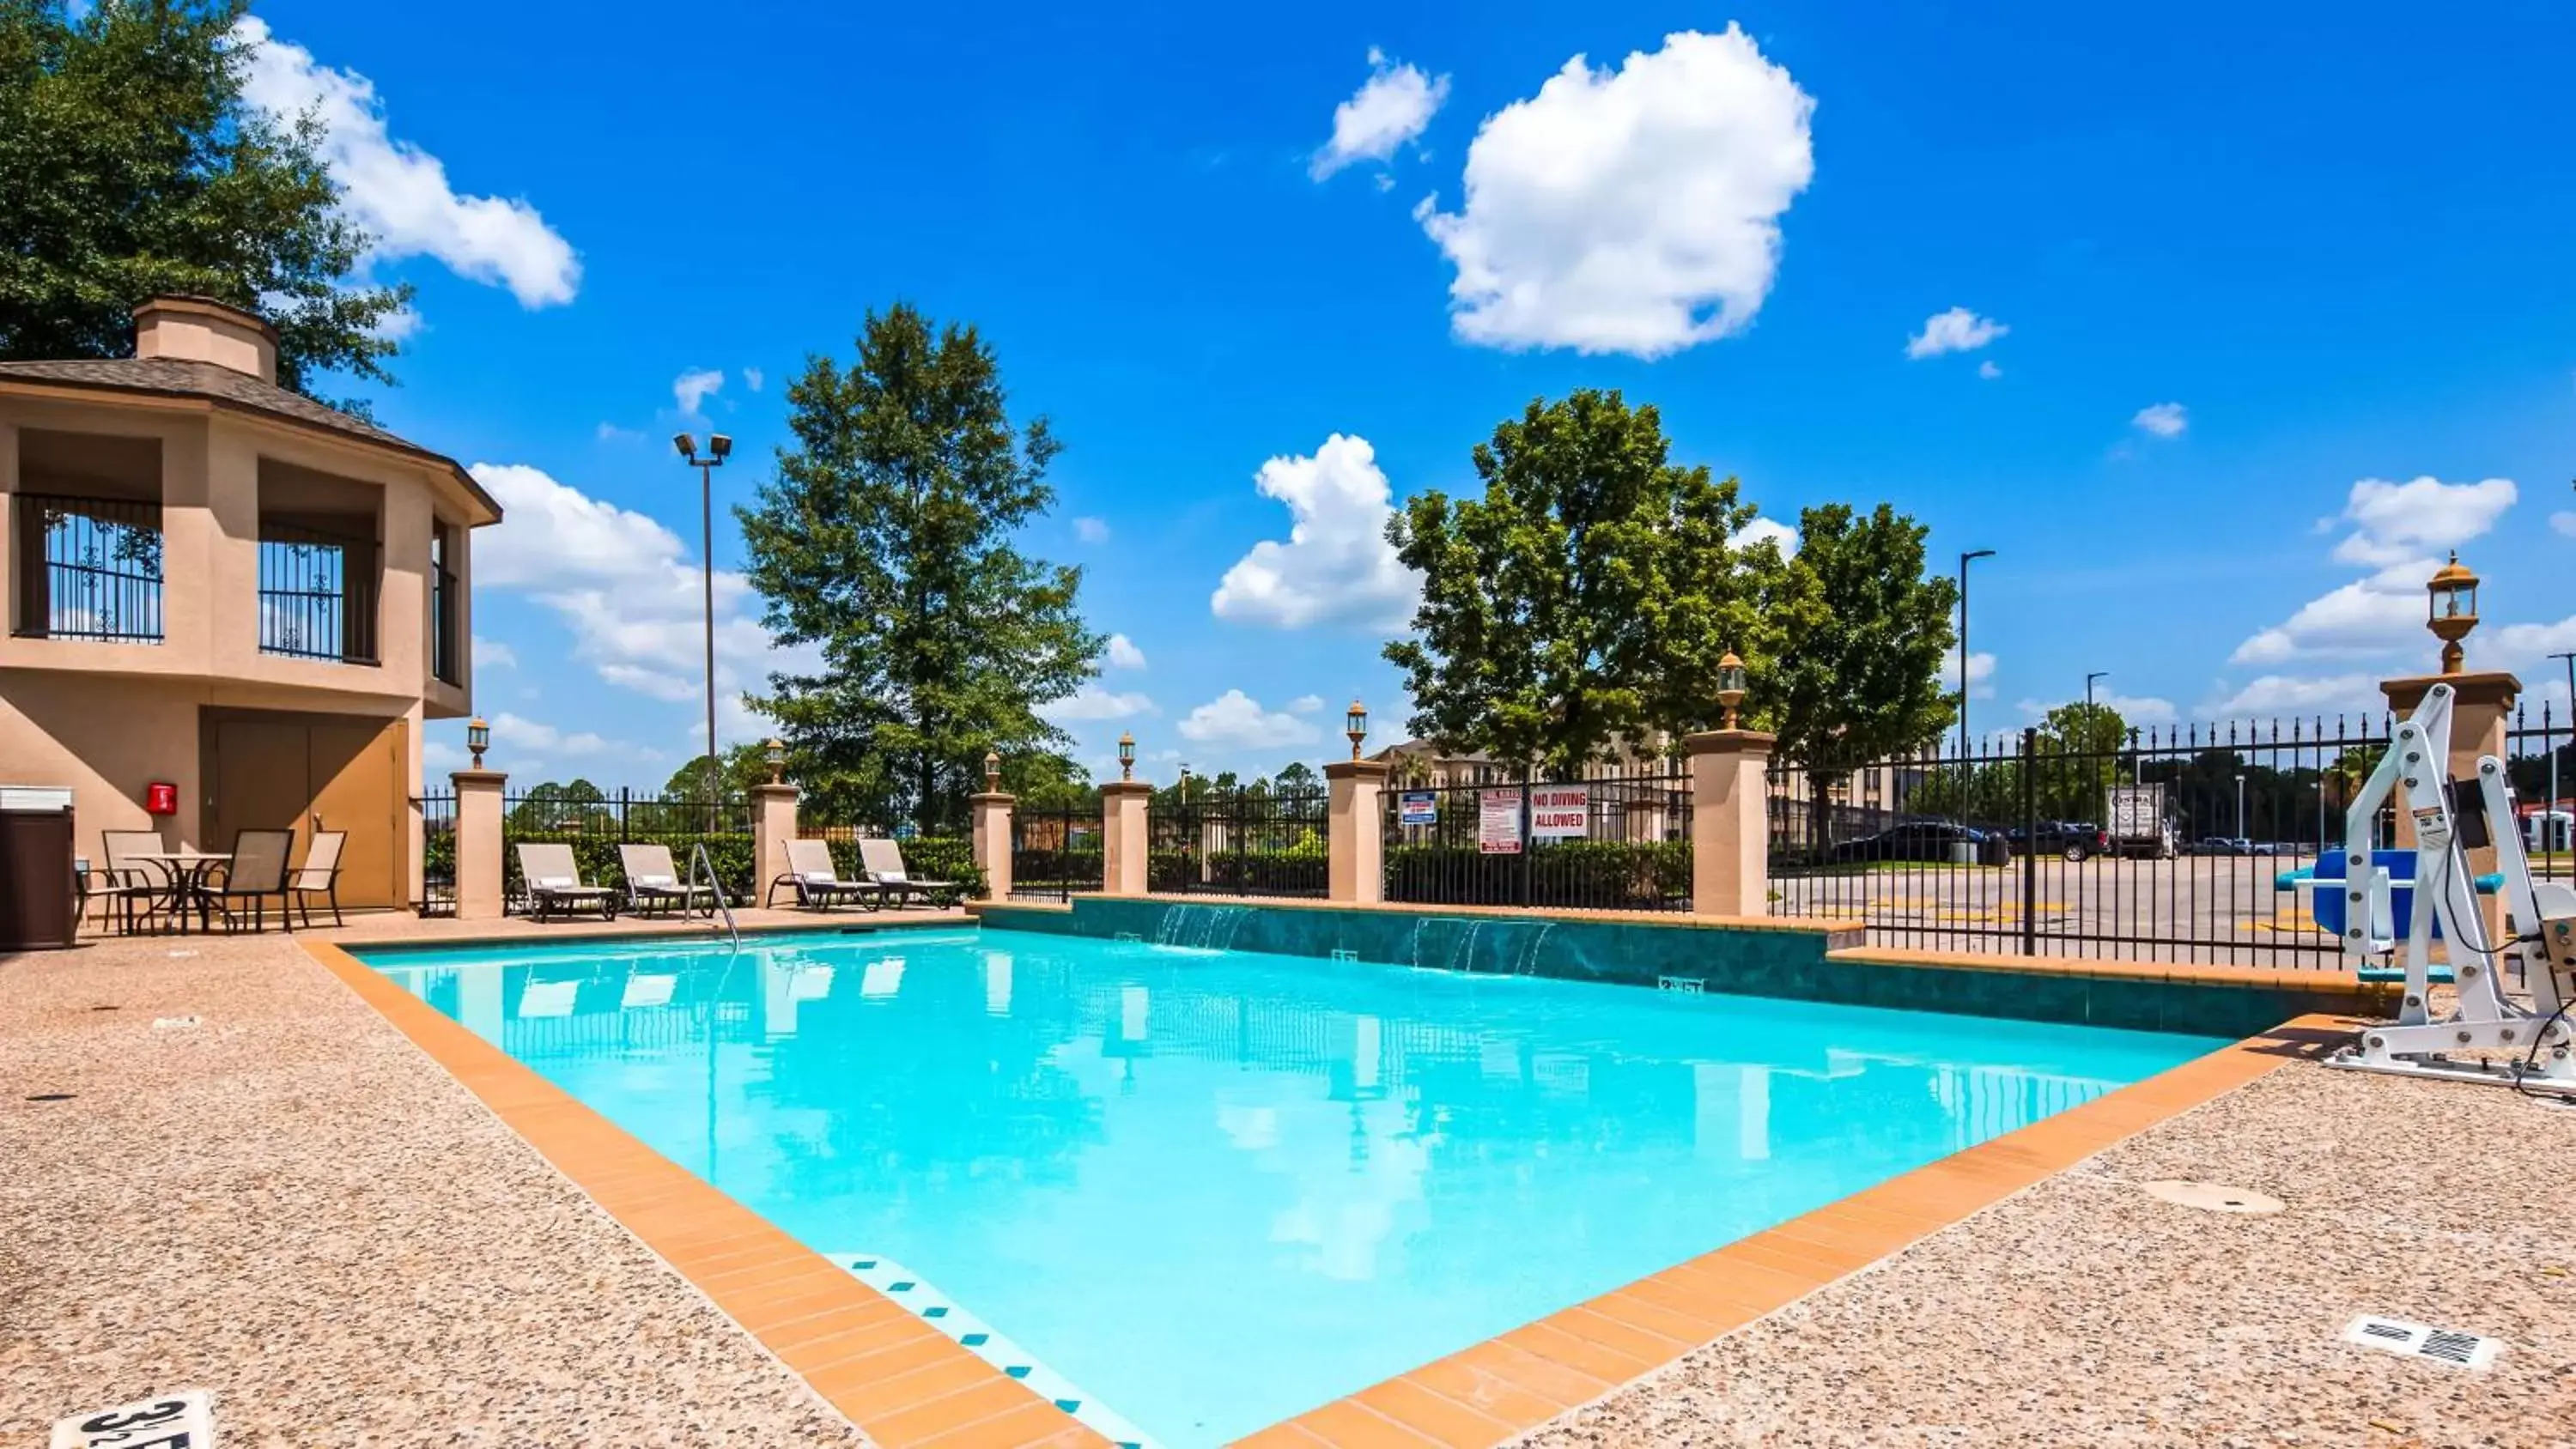 On site, Swimming Pool in Best Western Plus North Houston Inn & Suites